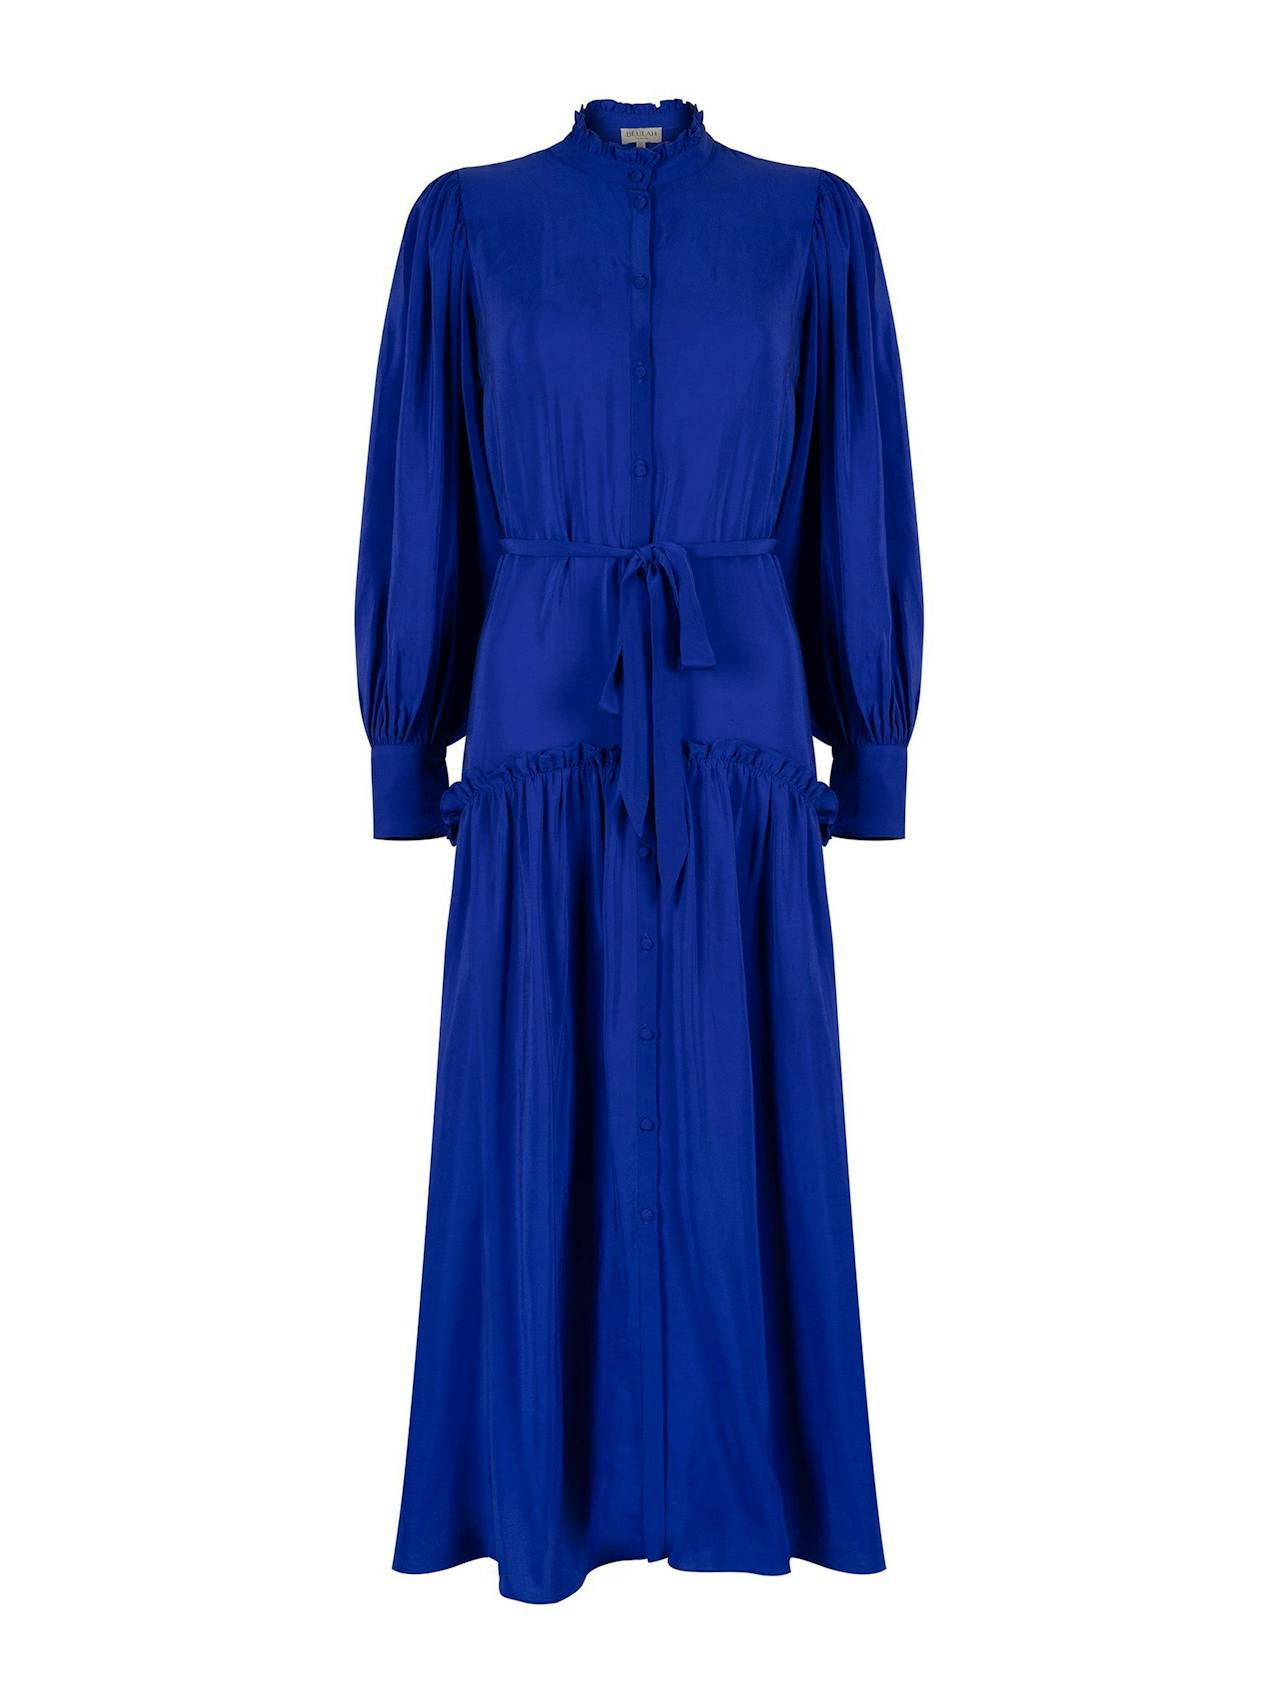 Cobalt blue Darsha dress